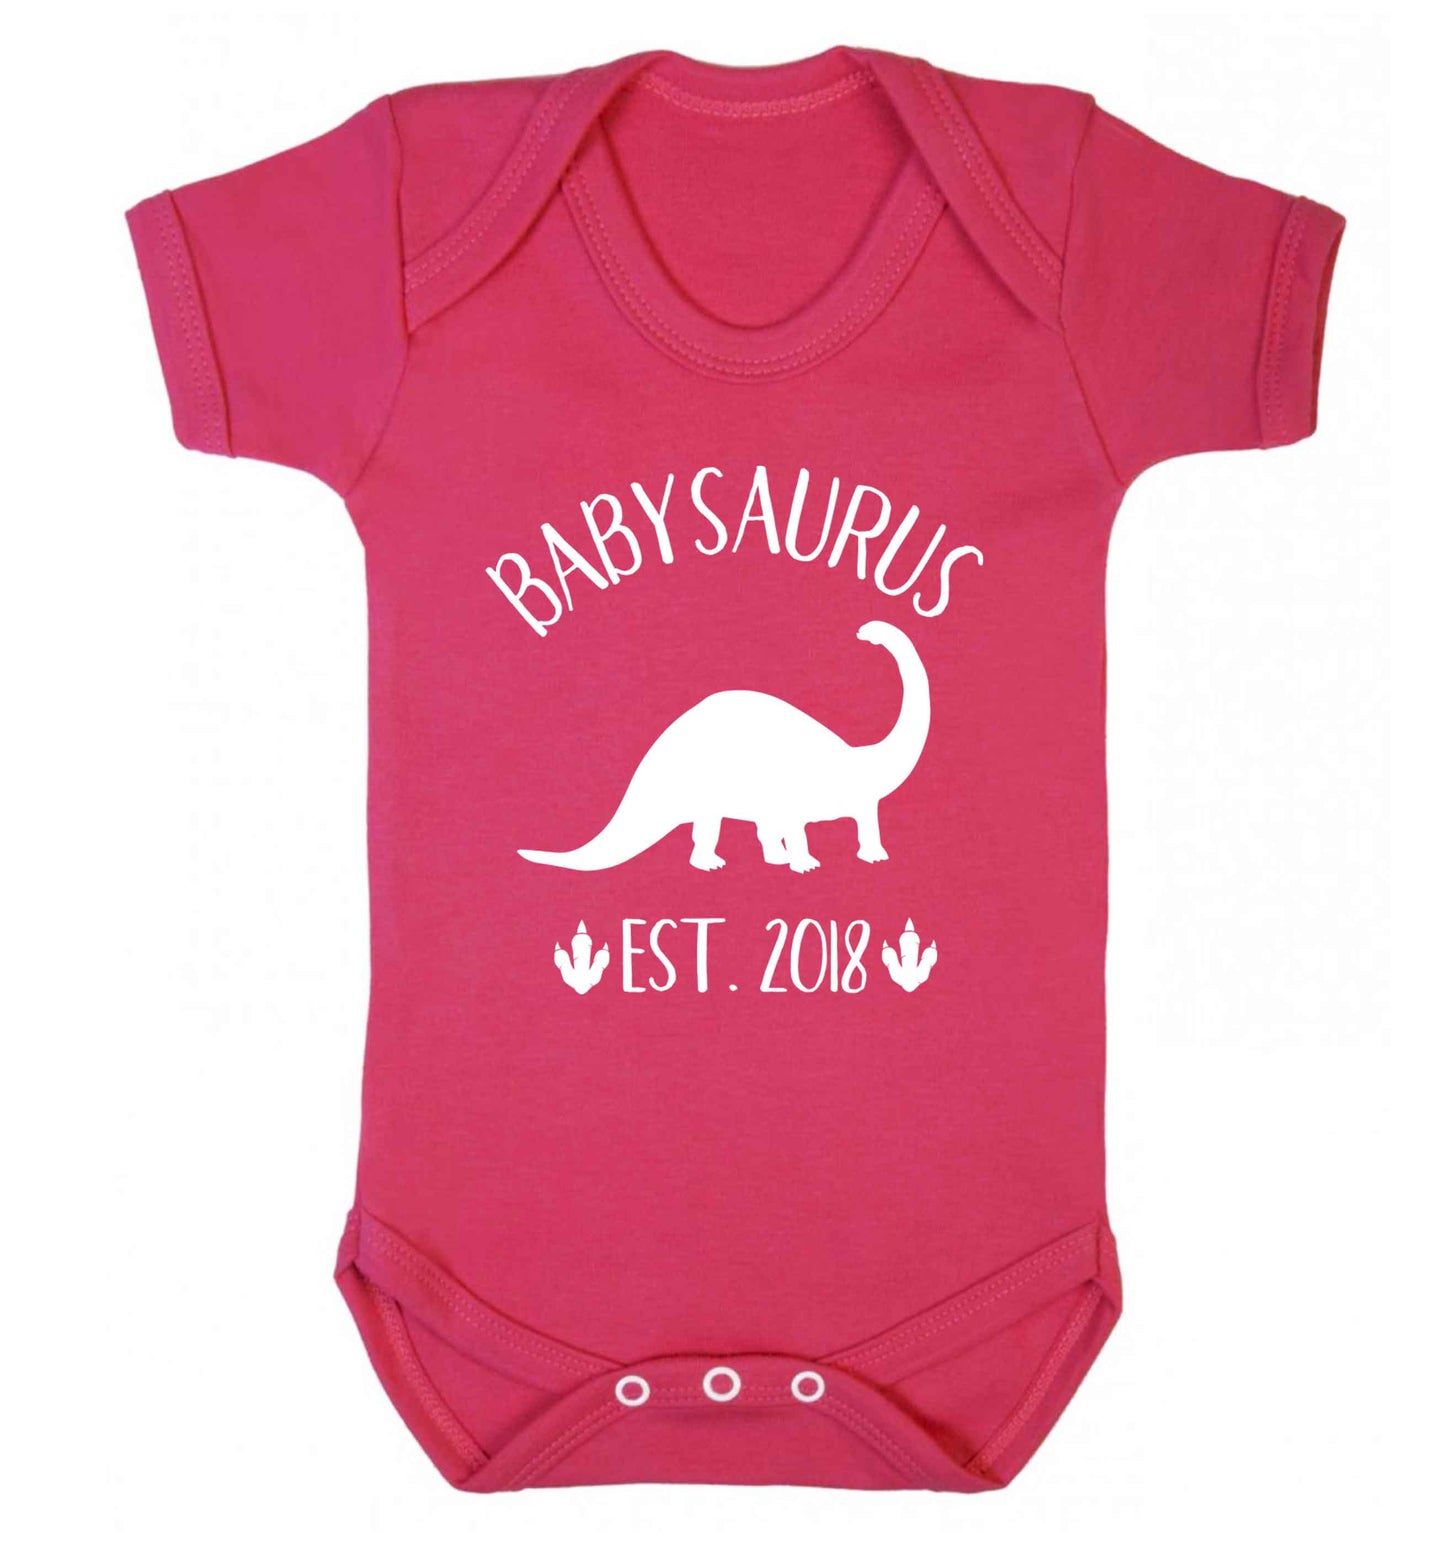 Personalised babysaurus since (custom date) Baby Vest dark pink 18-24 months